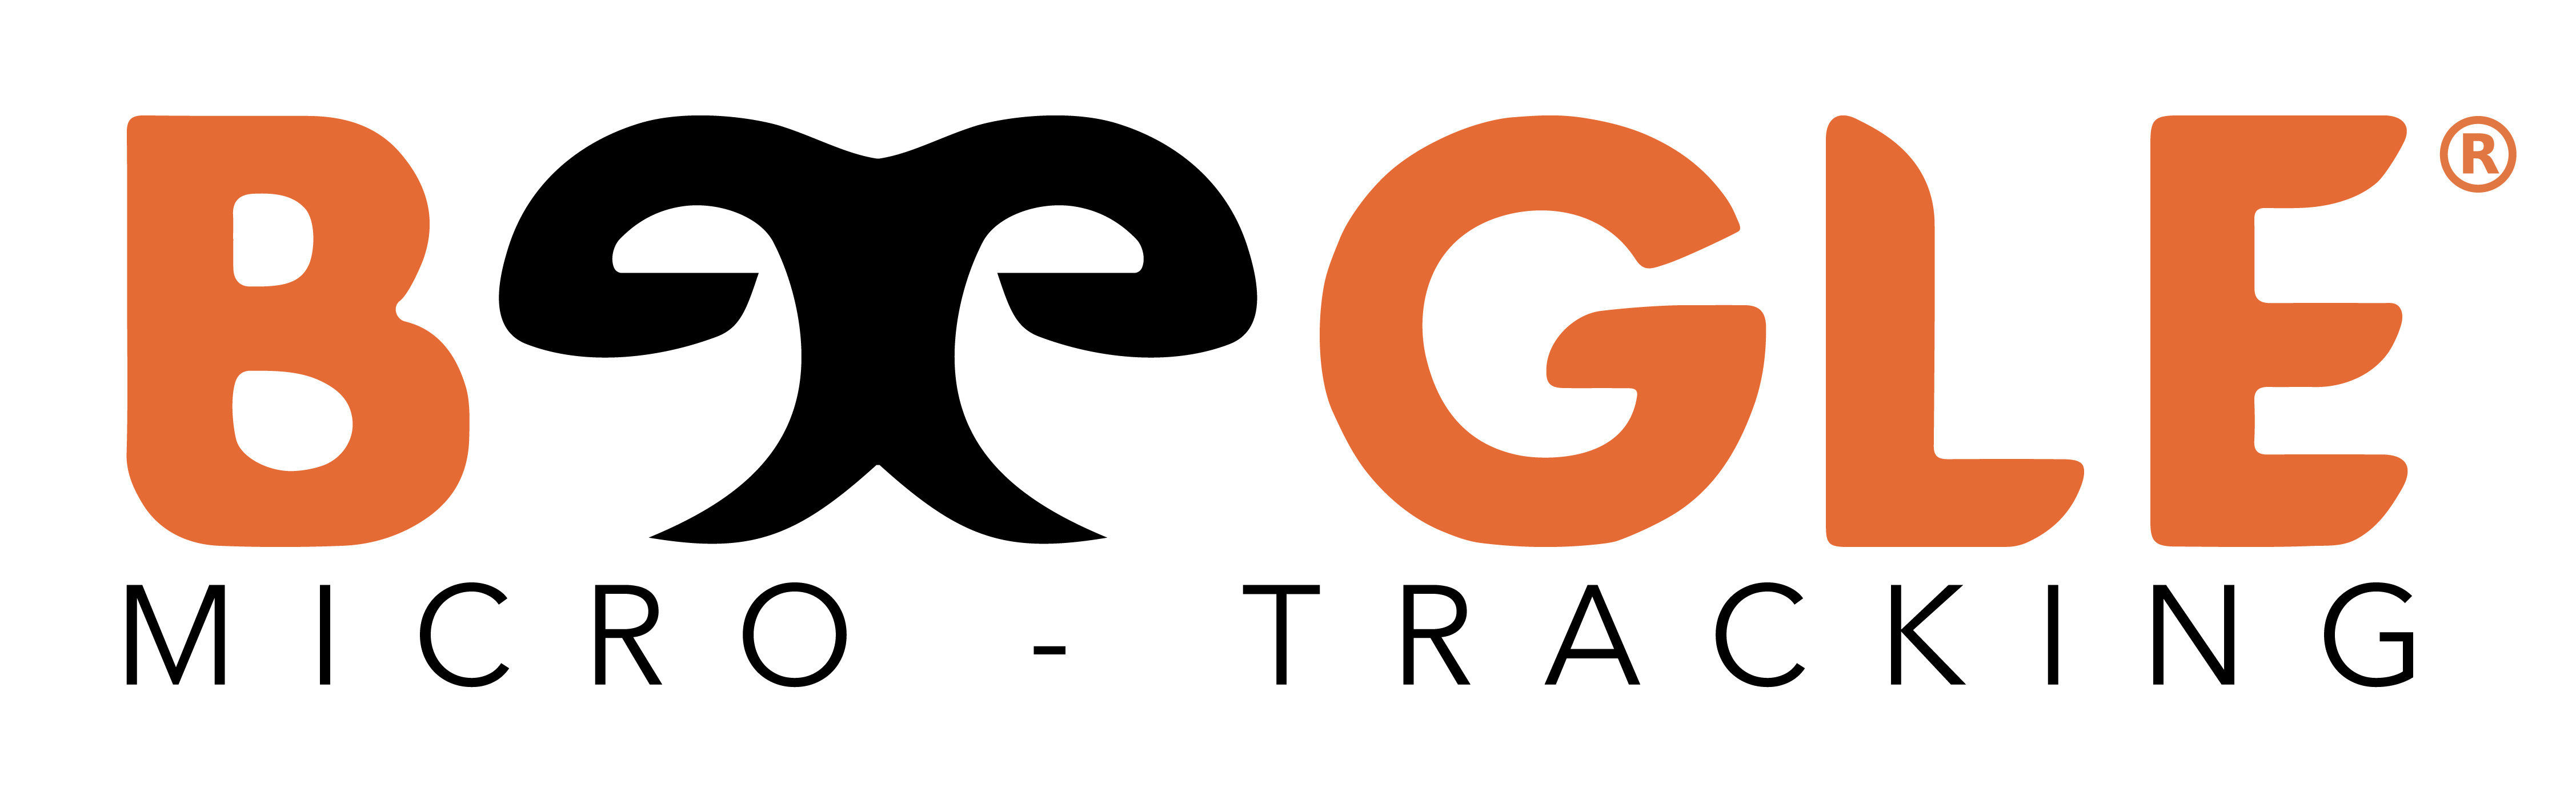 Beegle tracker logo 3